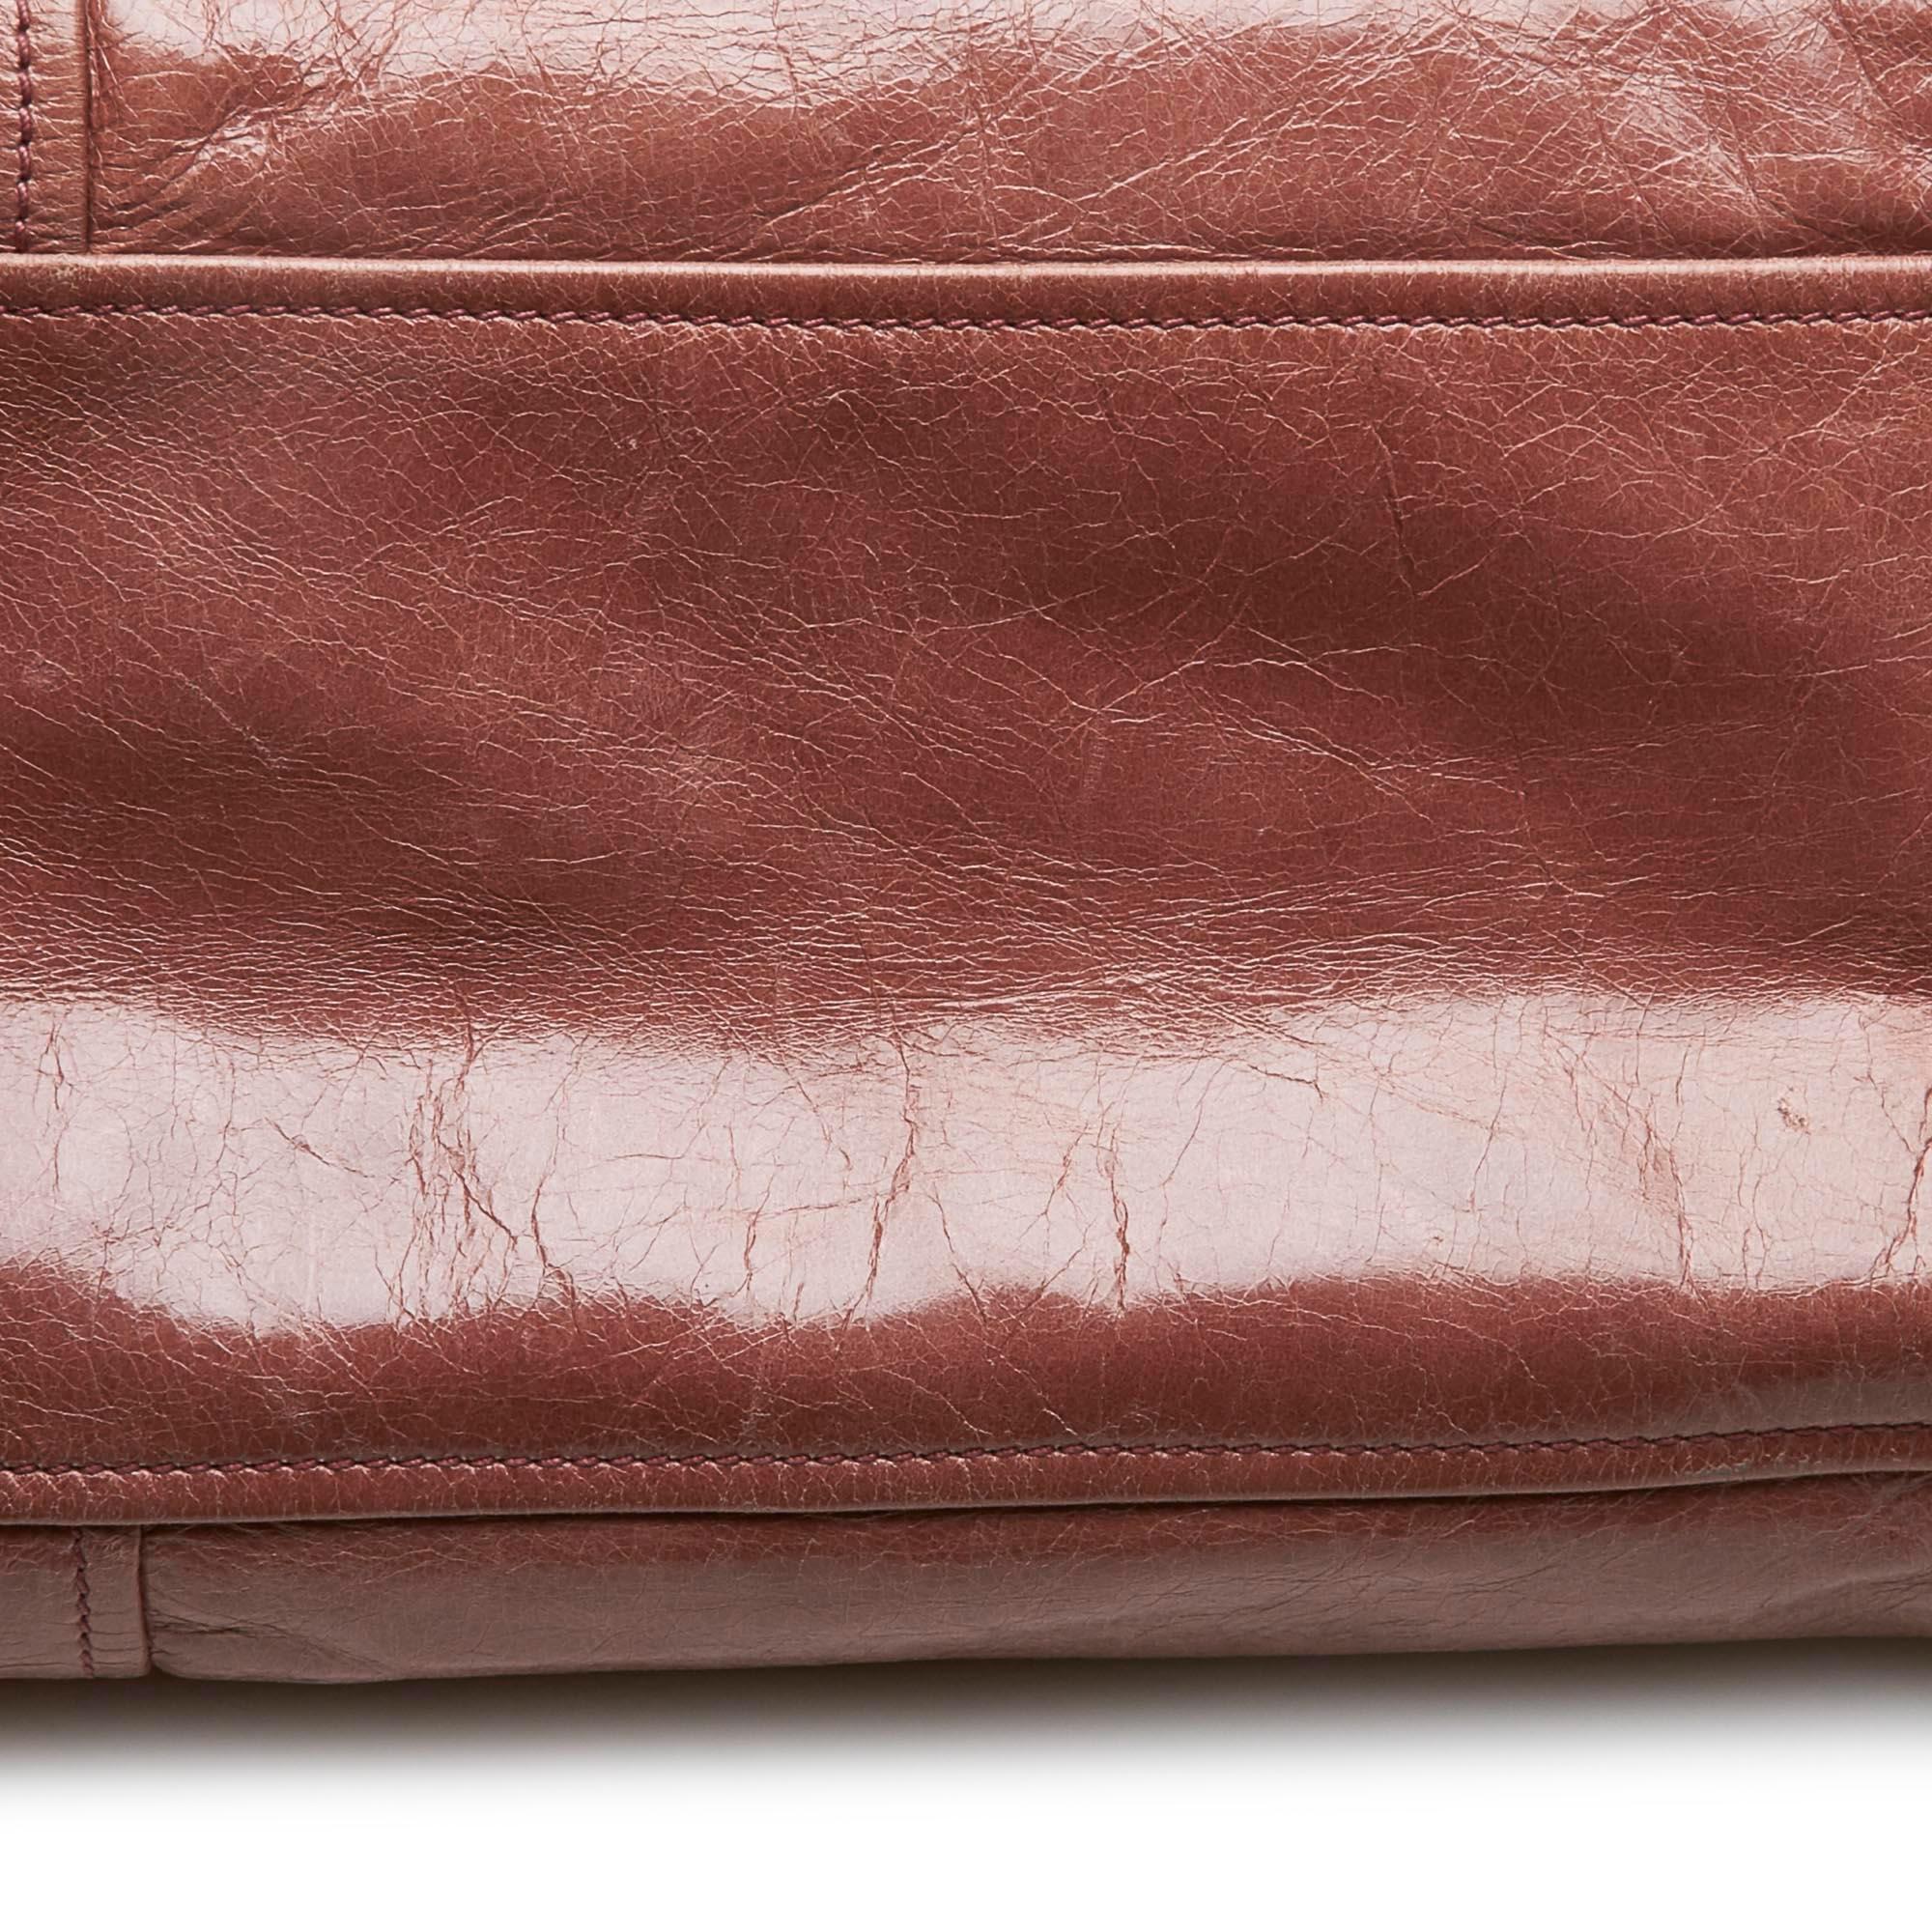 Vintage Authentic Prada Pink Leather Vitello Shine Satchel Italy MEDIUM  4